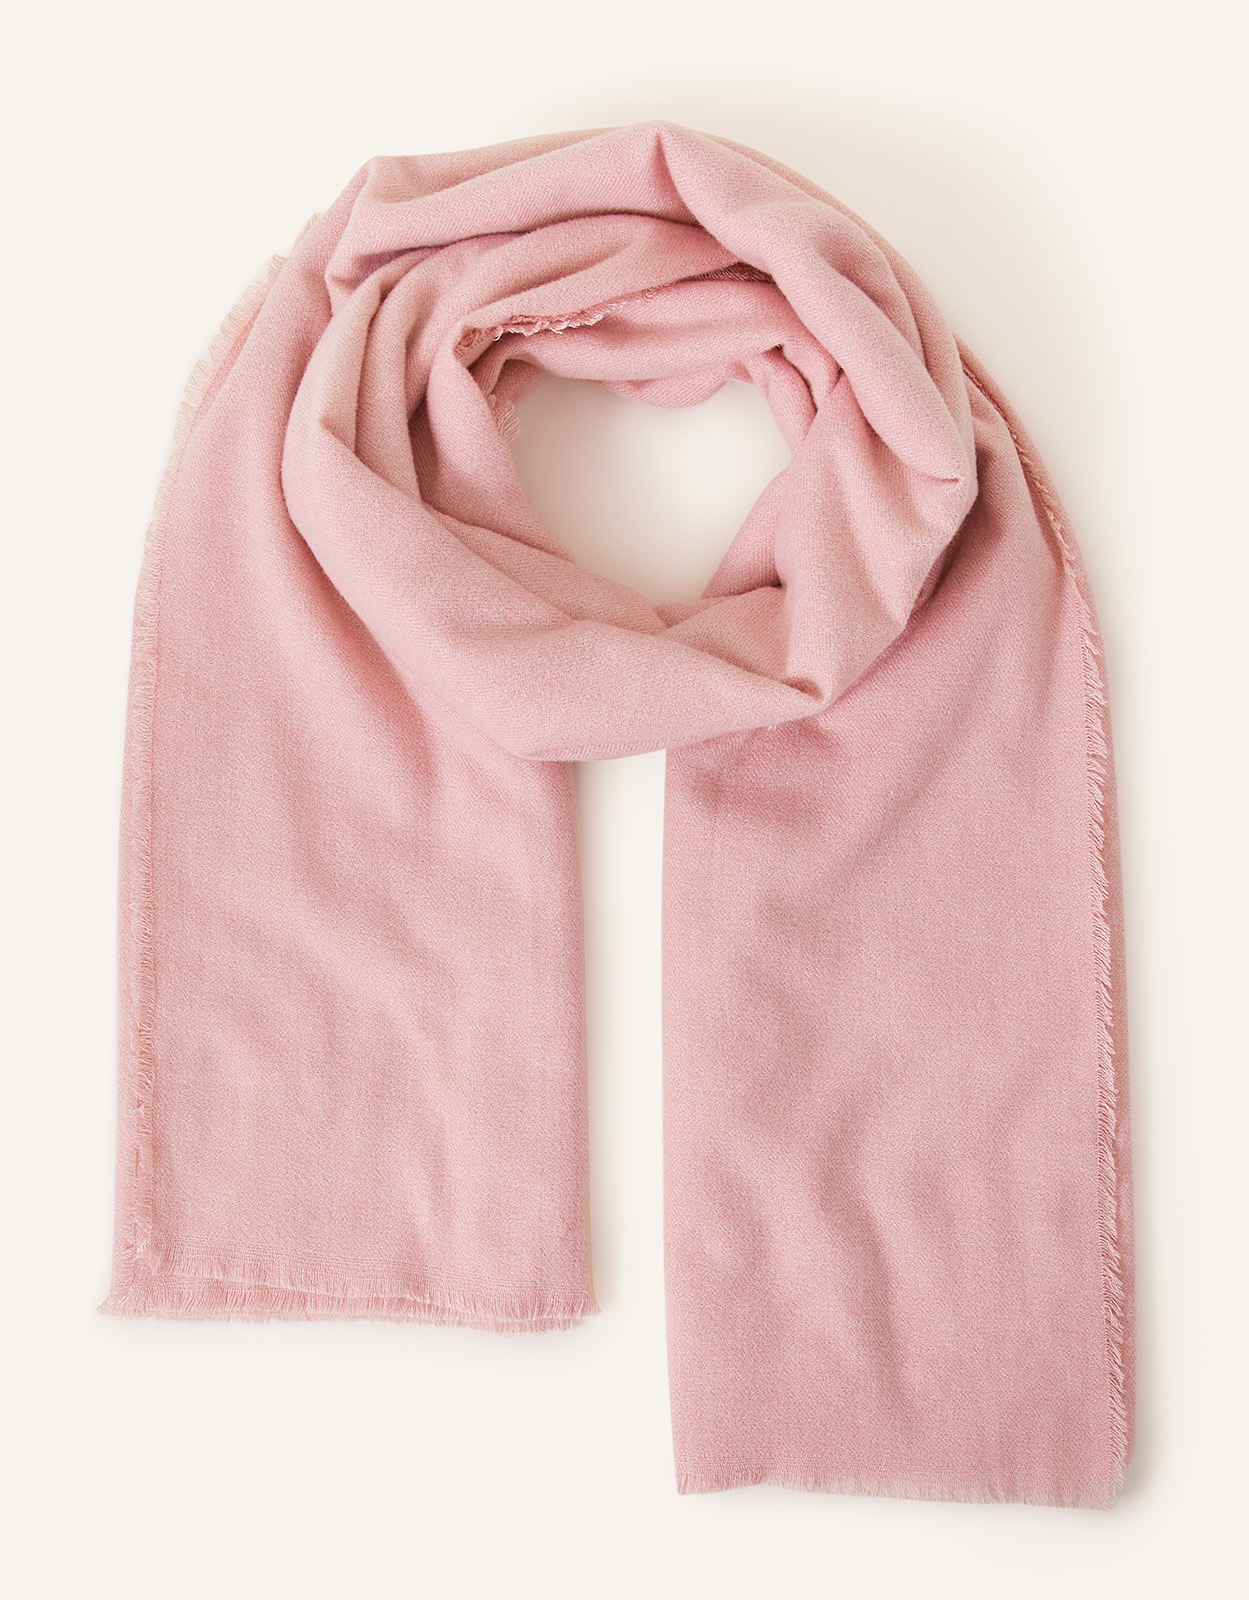 Accessorize Women's Light Pink Grace Super-Soft Blanket Scarf, Size: 100x180cm